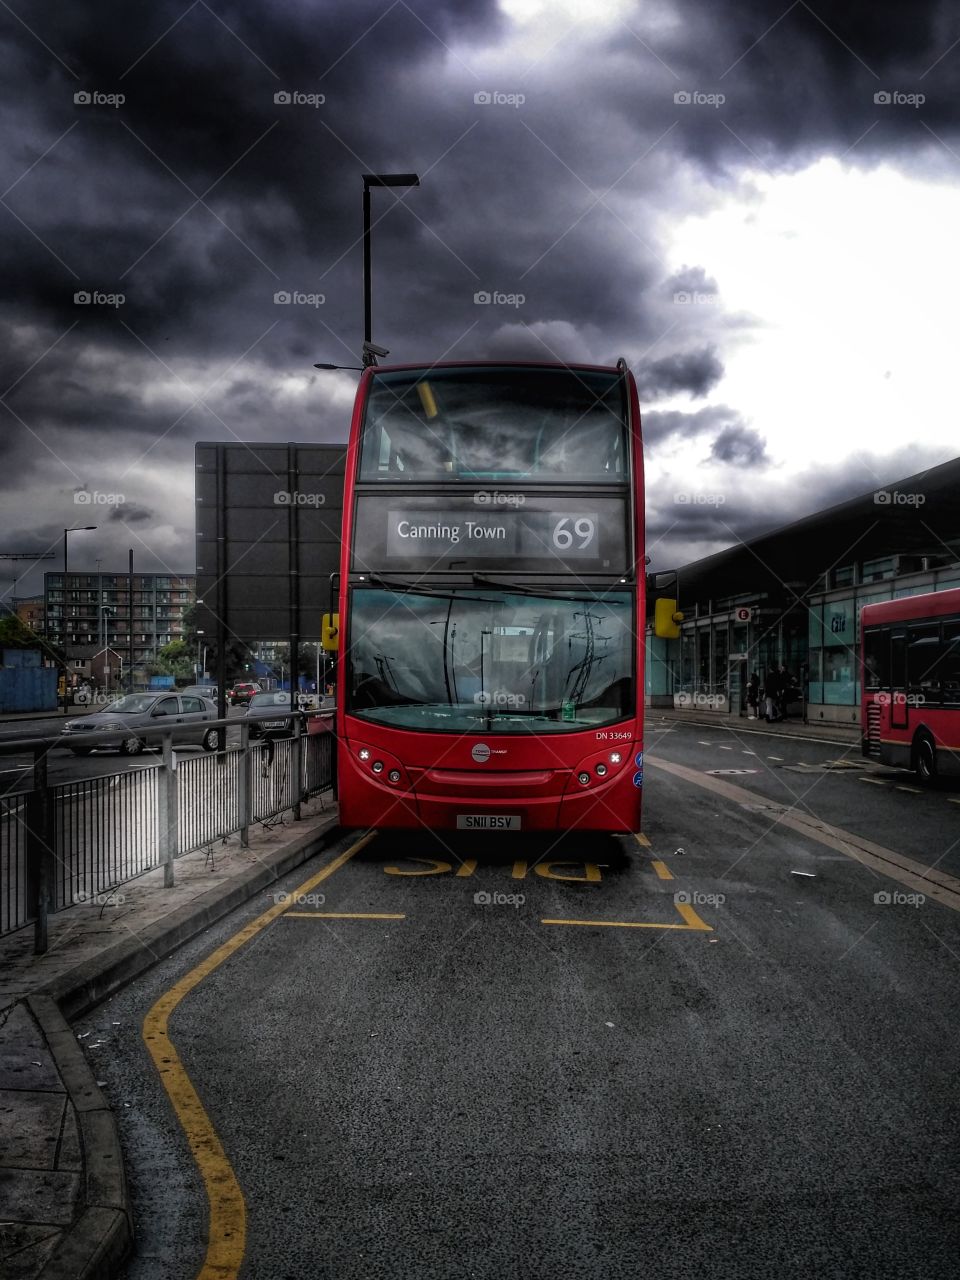 London bus